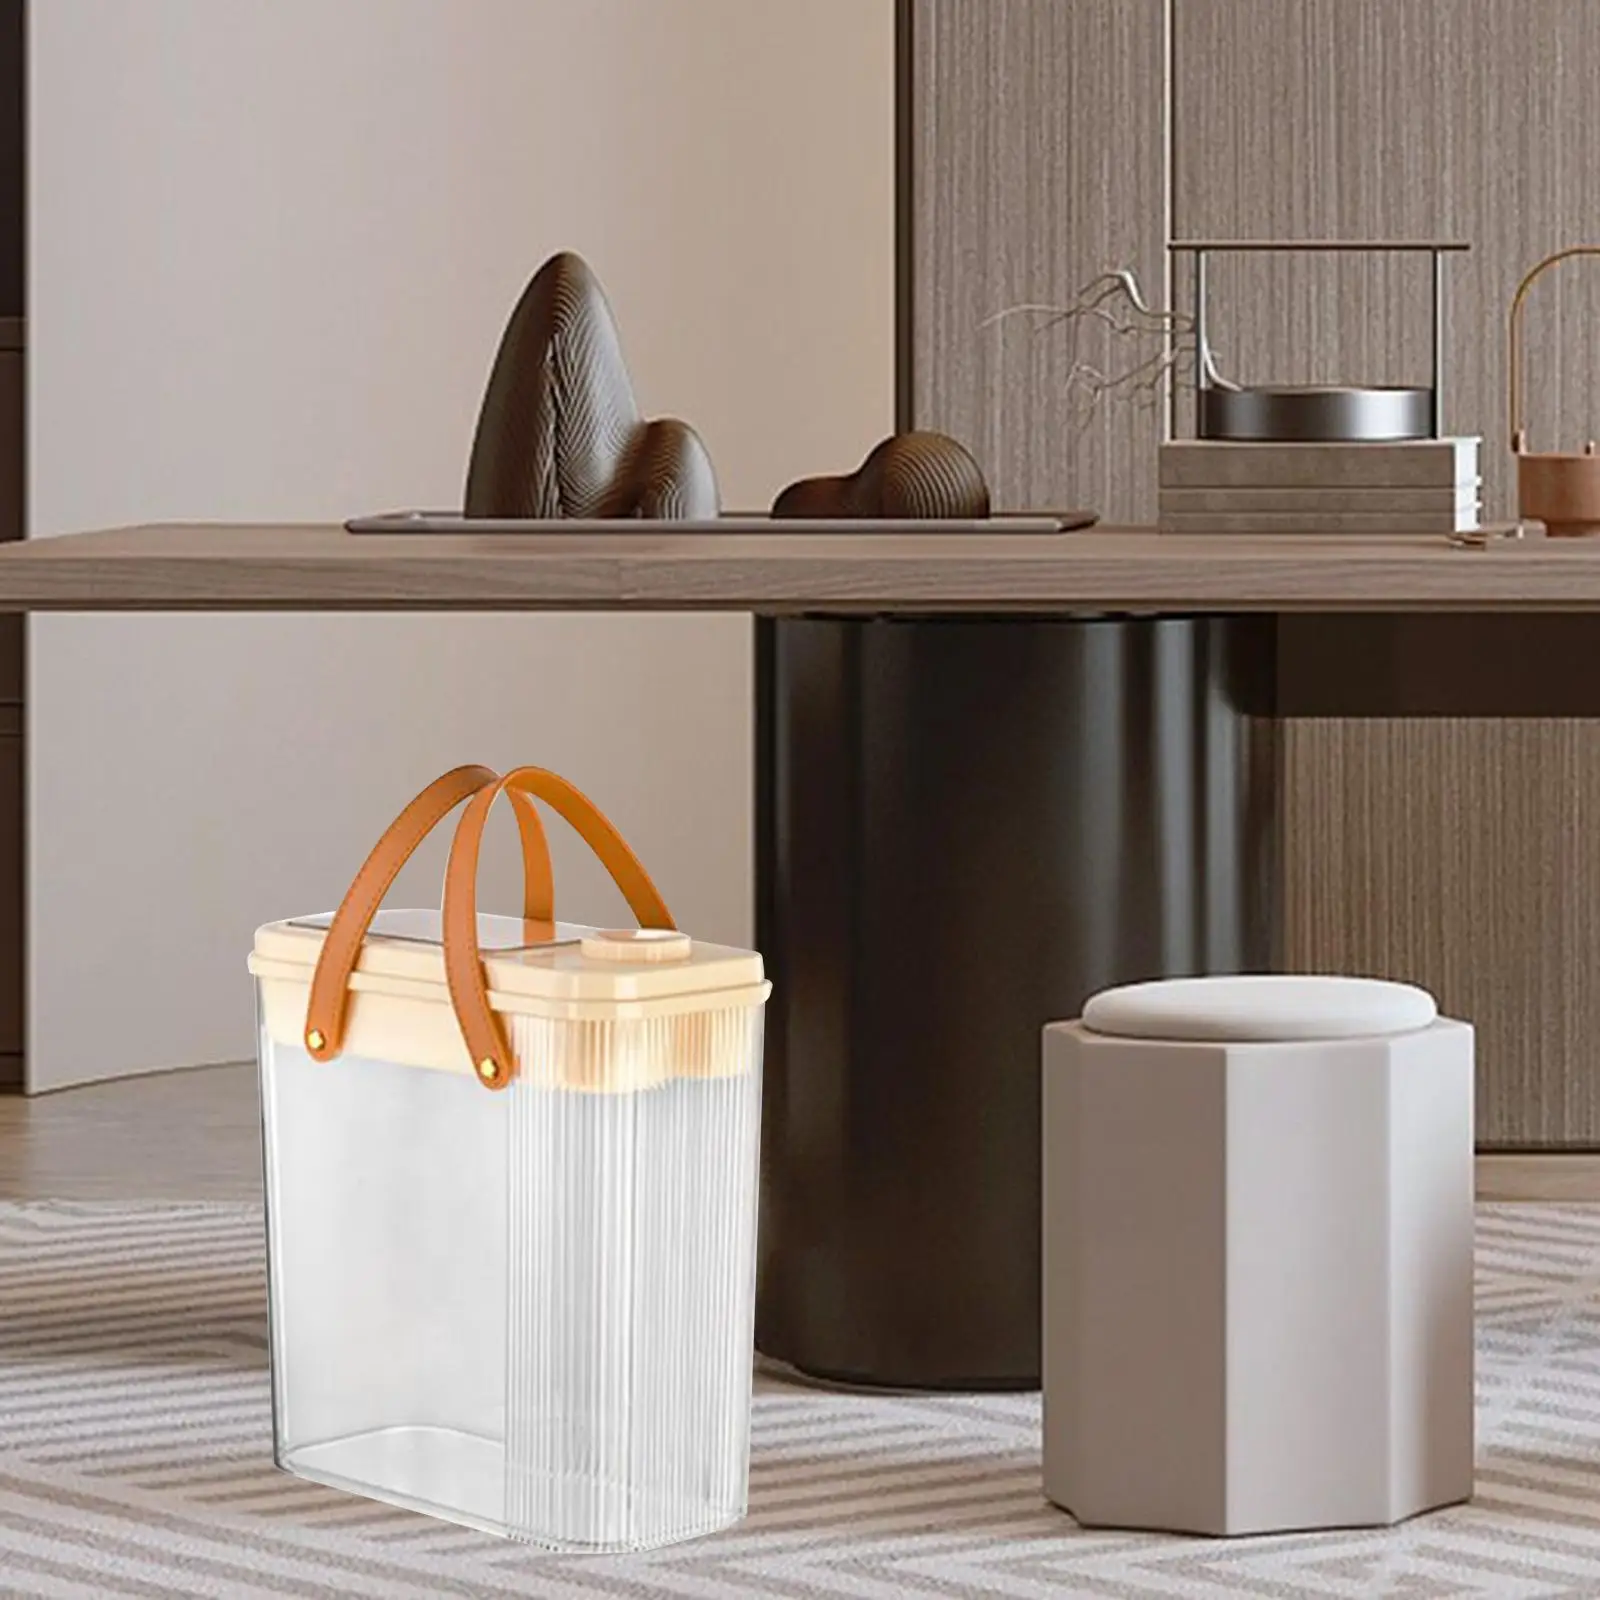 Tea Residue Filter Bucket Drainage Rubbish Can Premium Wastebasket Storage Bucket for Home Living Room Kitchen Bathroom Business